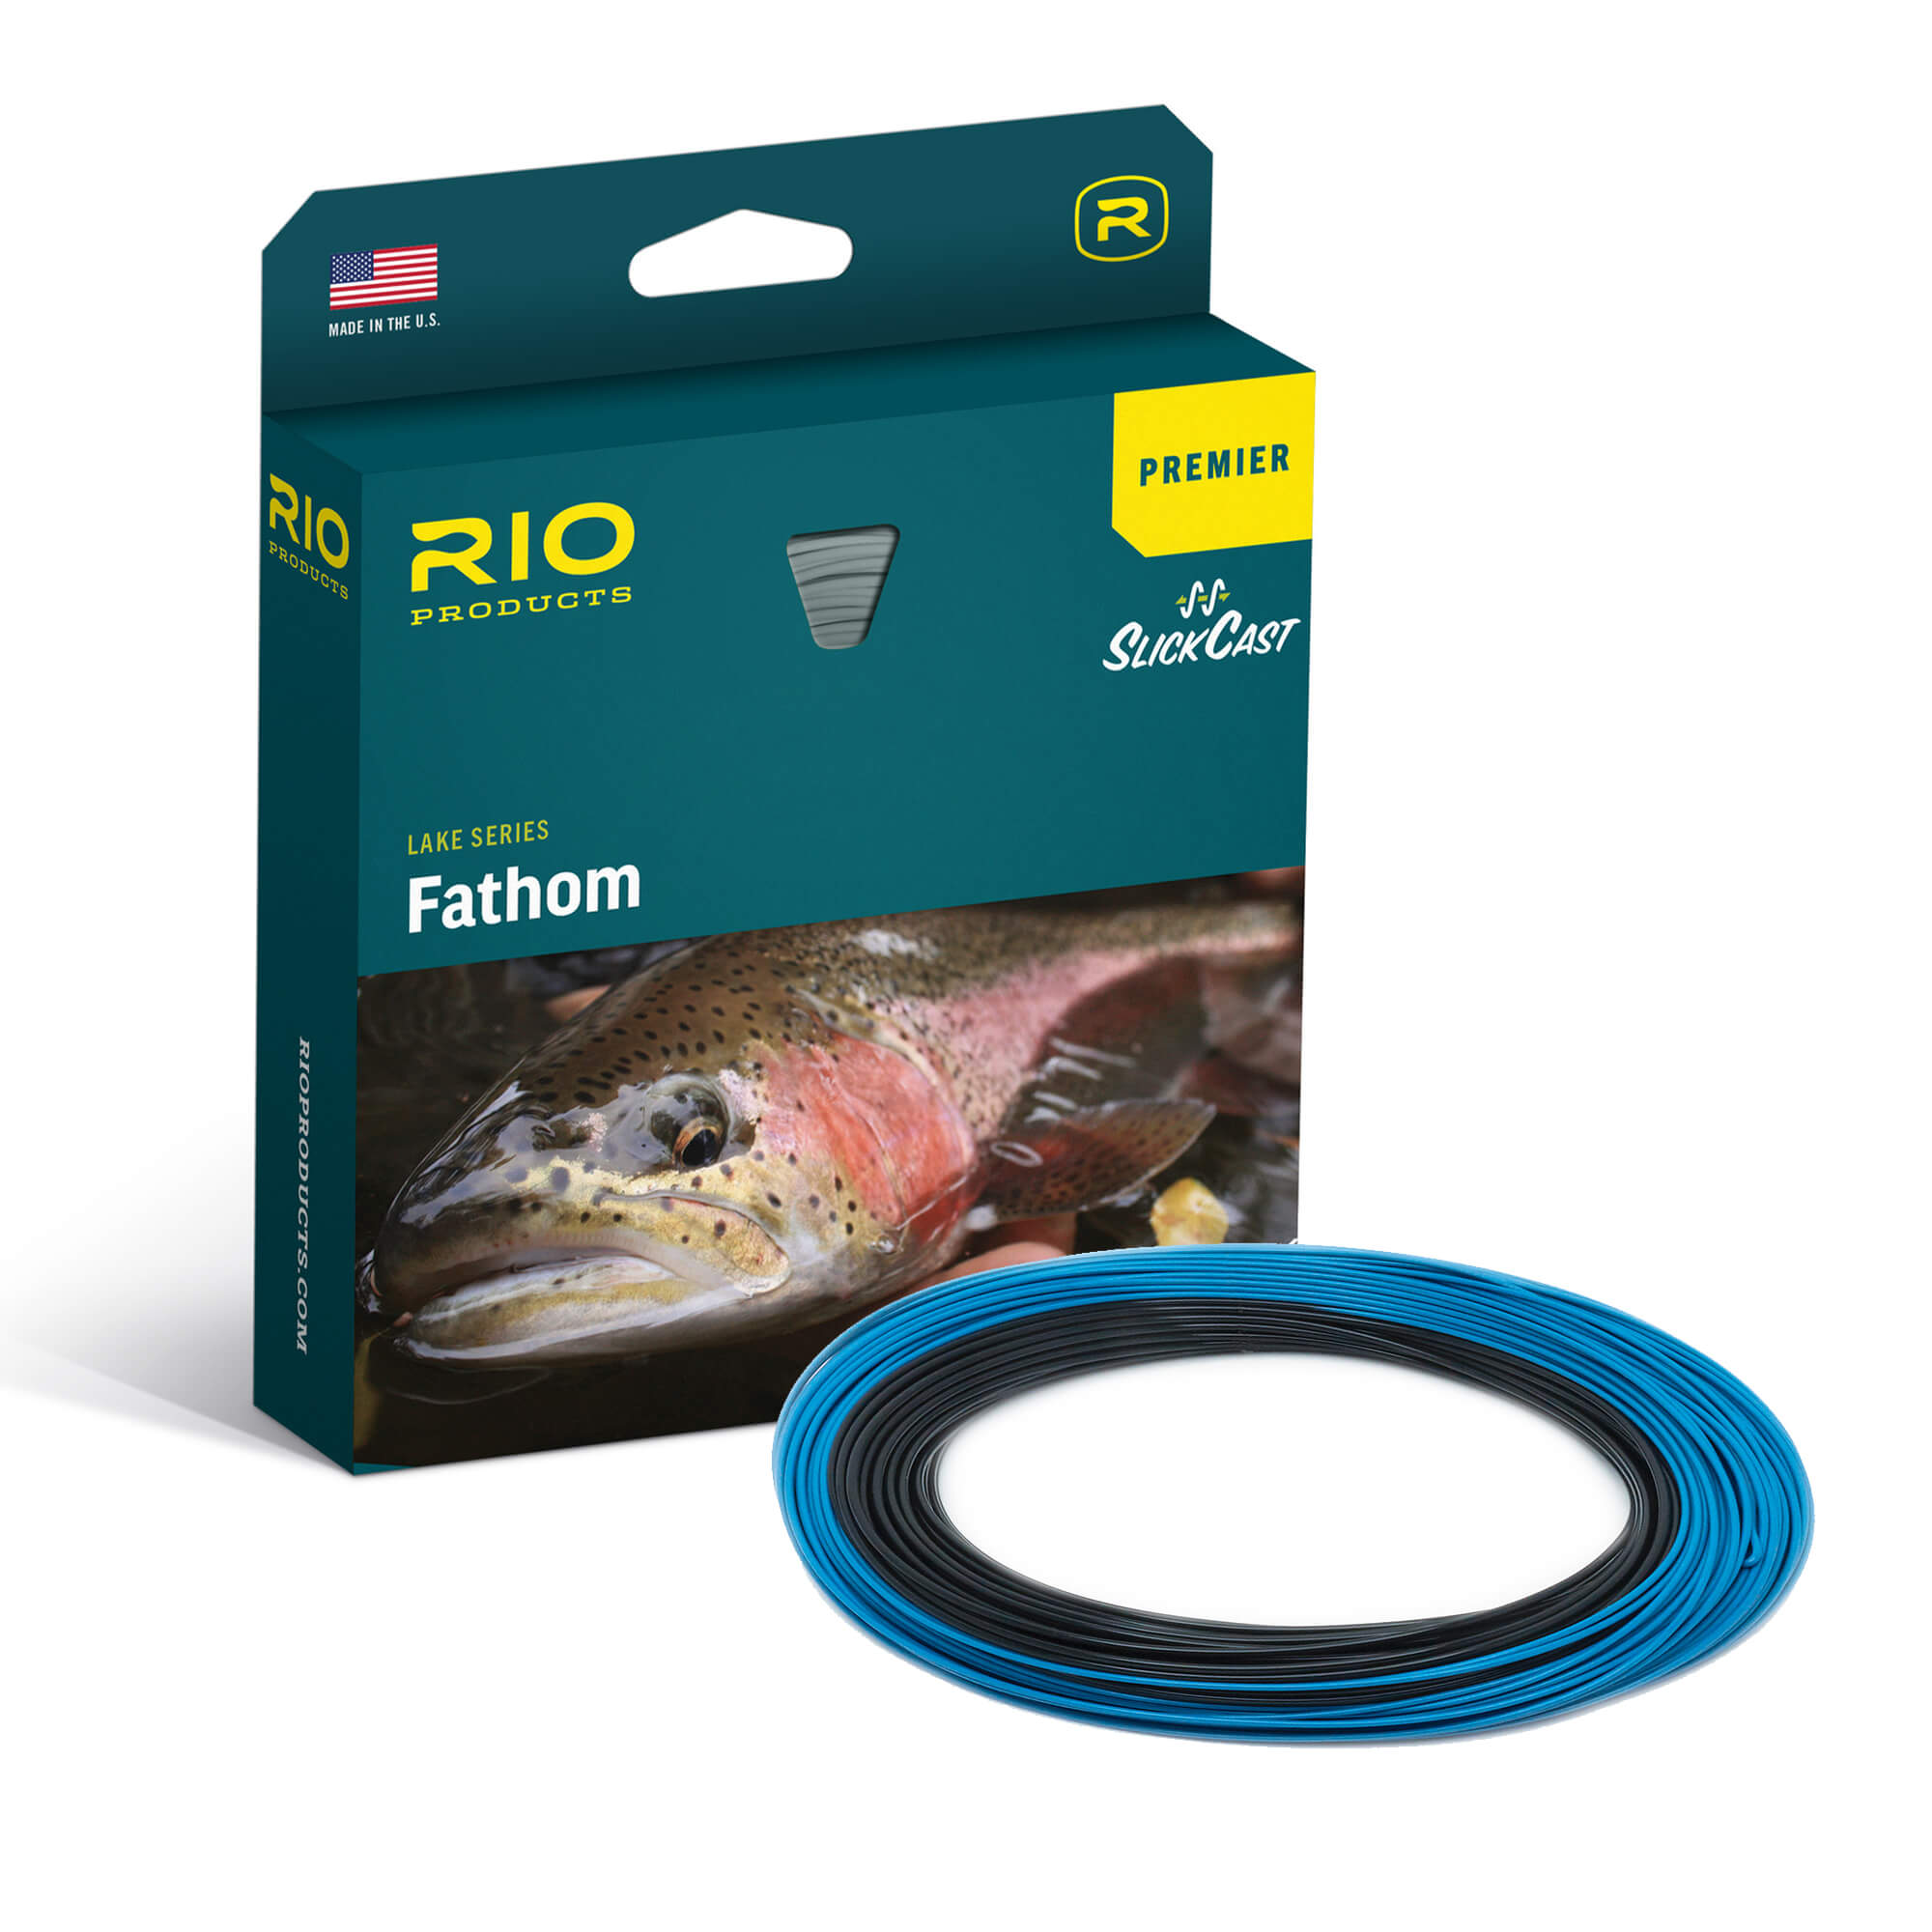 RIO Premier Fathom Fly Line – Guide Flyfishing